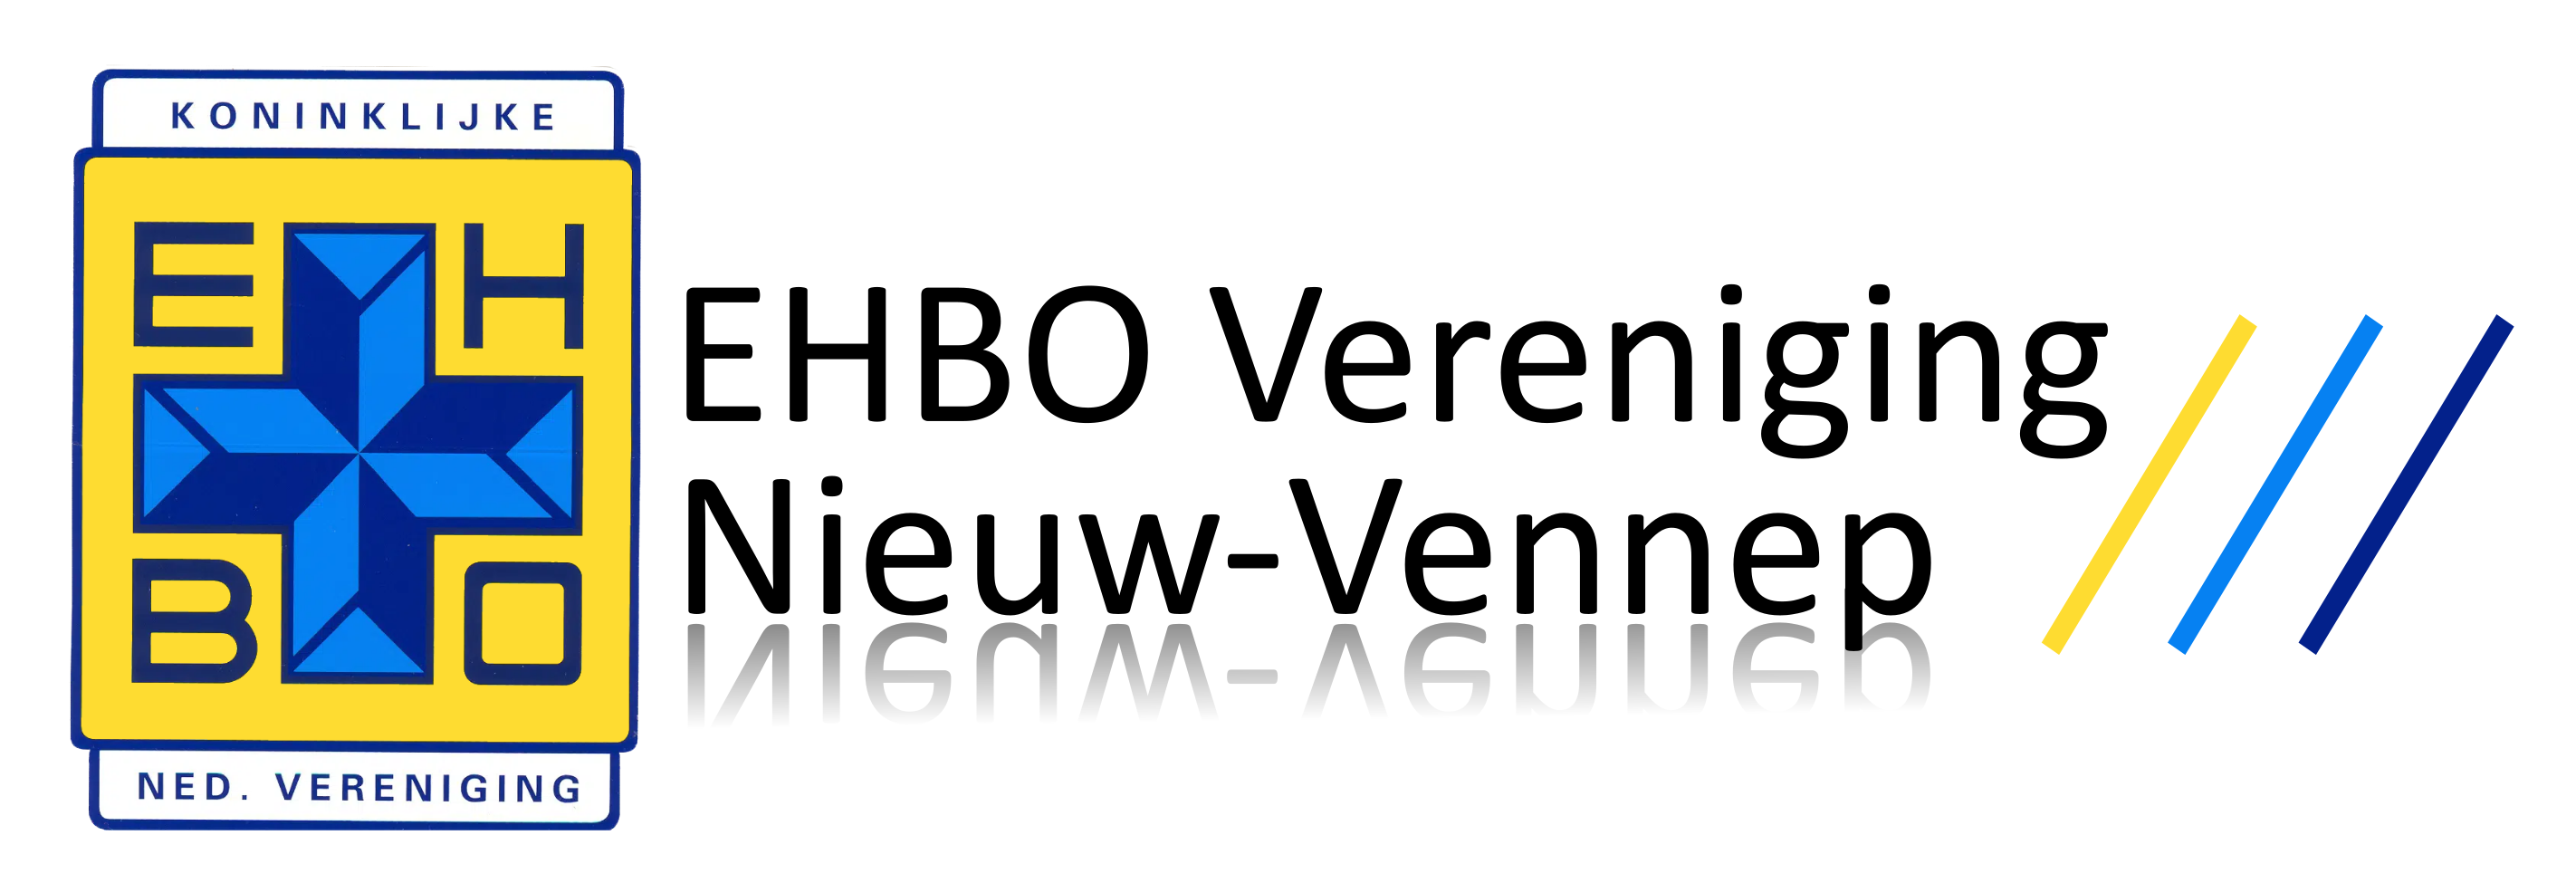 EHBO vereniging Nieuw-Vennep